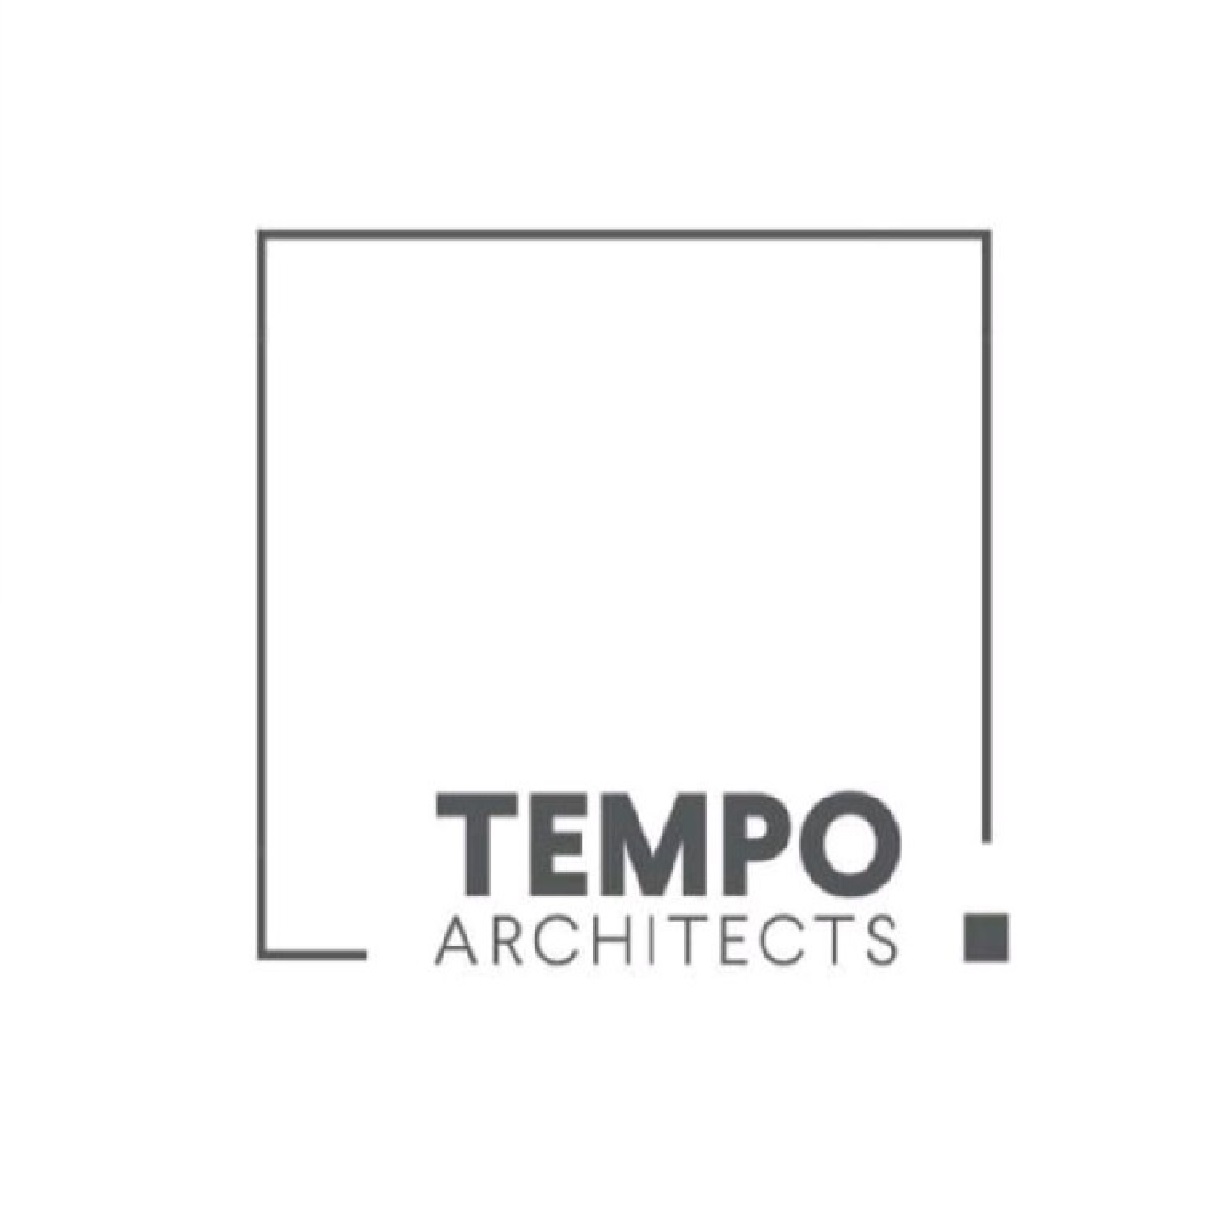 Tempo Architects